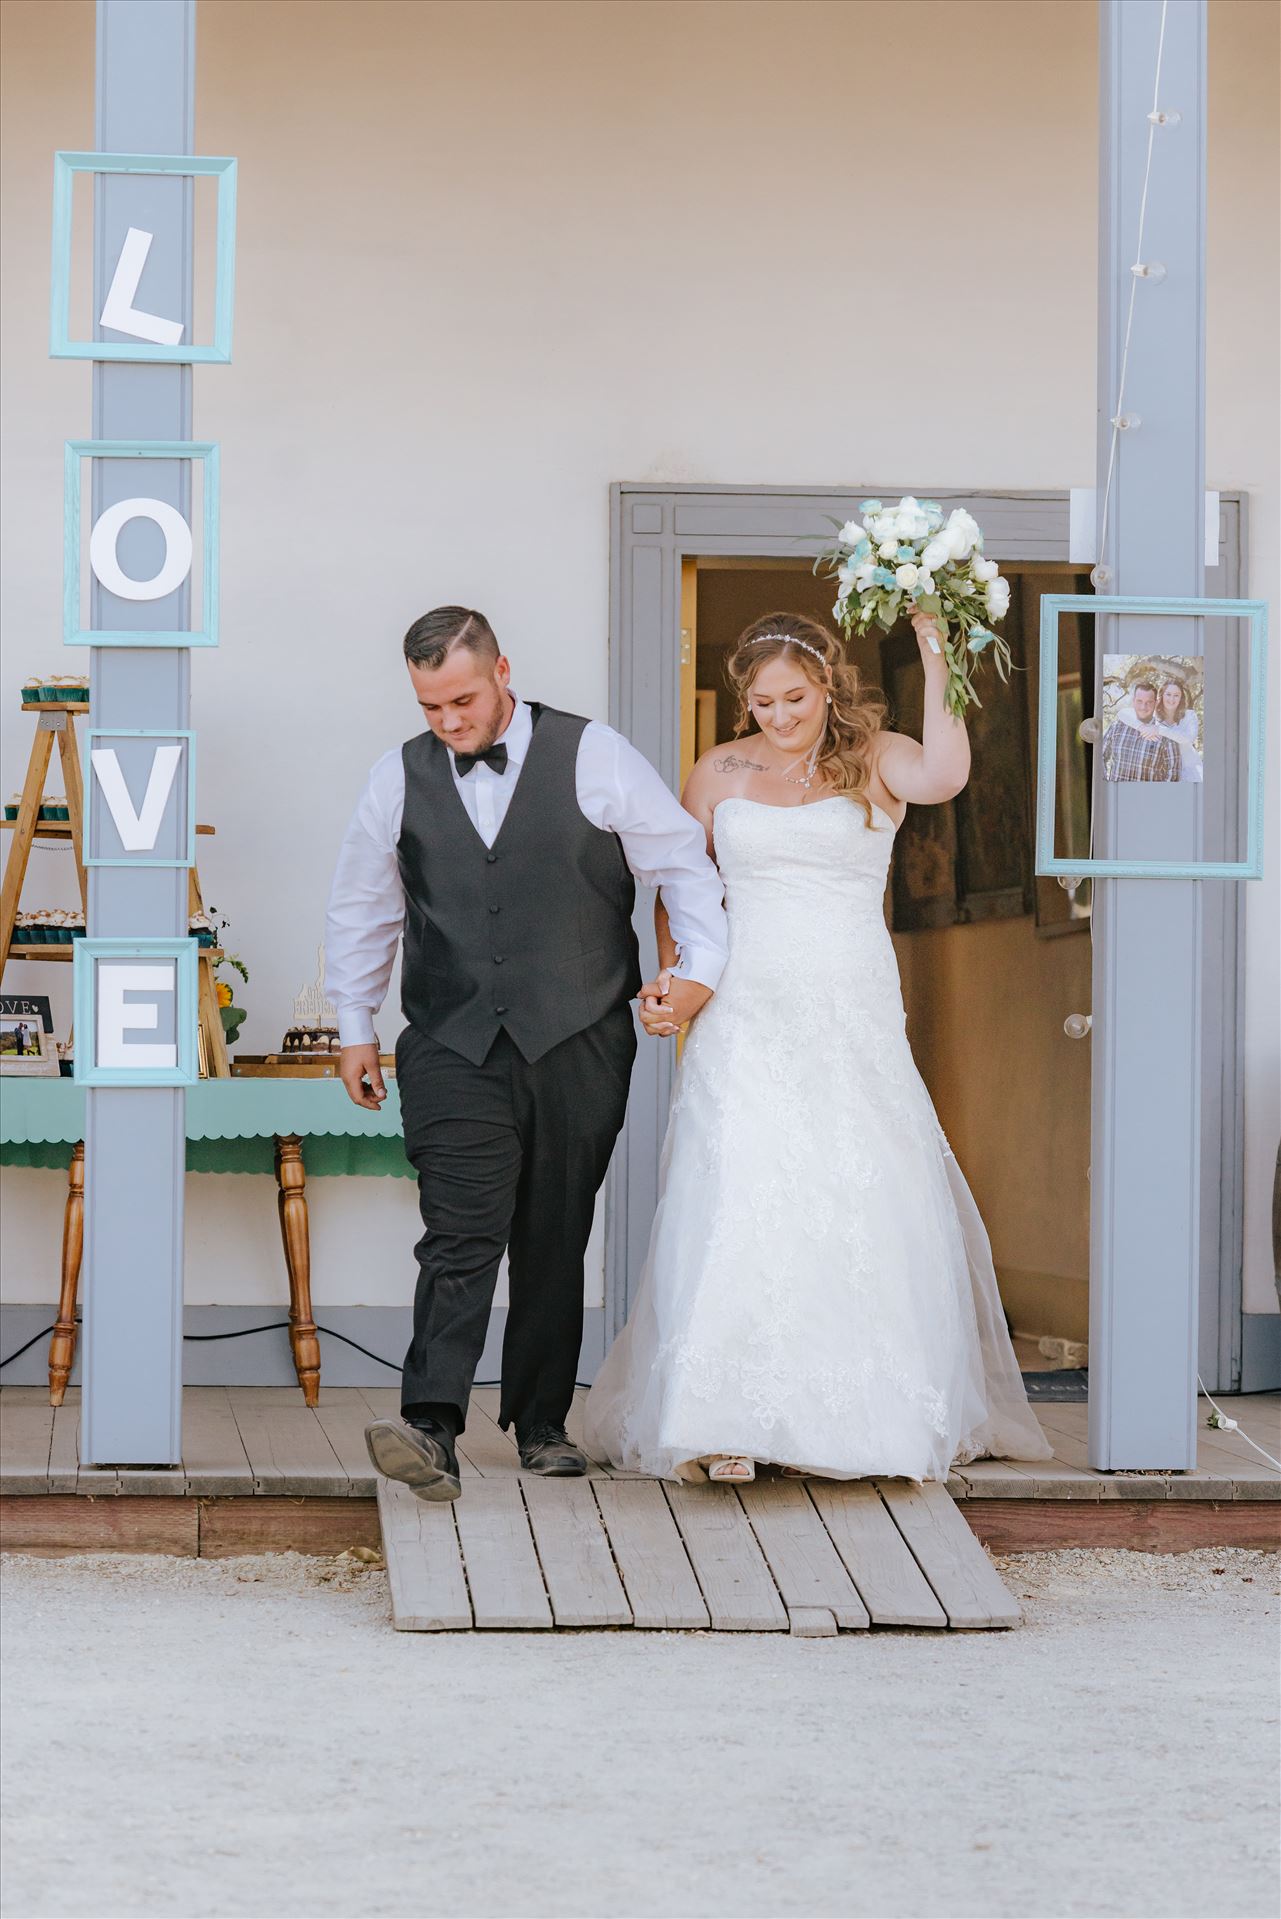 Cherie and Brandon 099 - Mirror's Edge Photography, a San Luis Obispo Wedding Photographer, captures a wedding at the Historic Dana Adobe in Nipomo California.  Grand Entrance from the Dana Adobe. by Sarah Williams